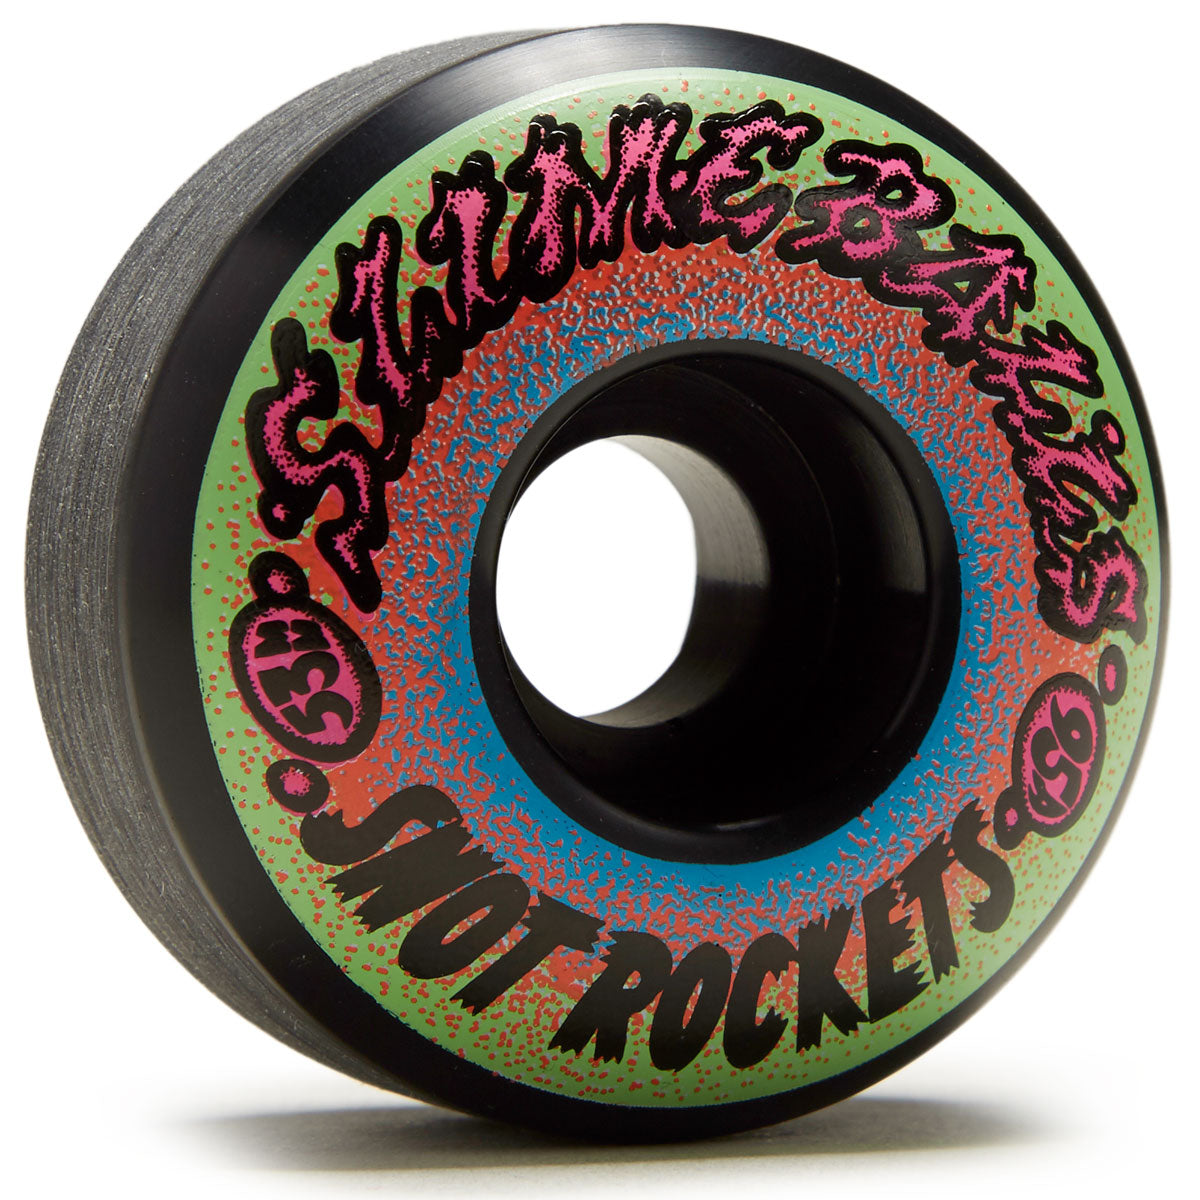 Slime Balls Snot Rockets 95a Skateboard Wheels - Yellow - 53mm image 1